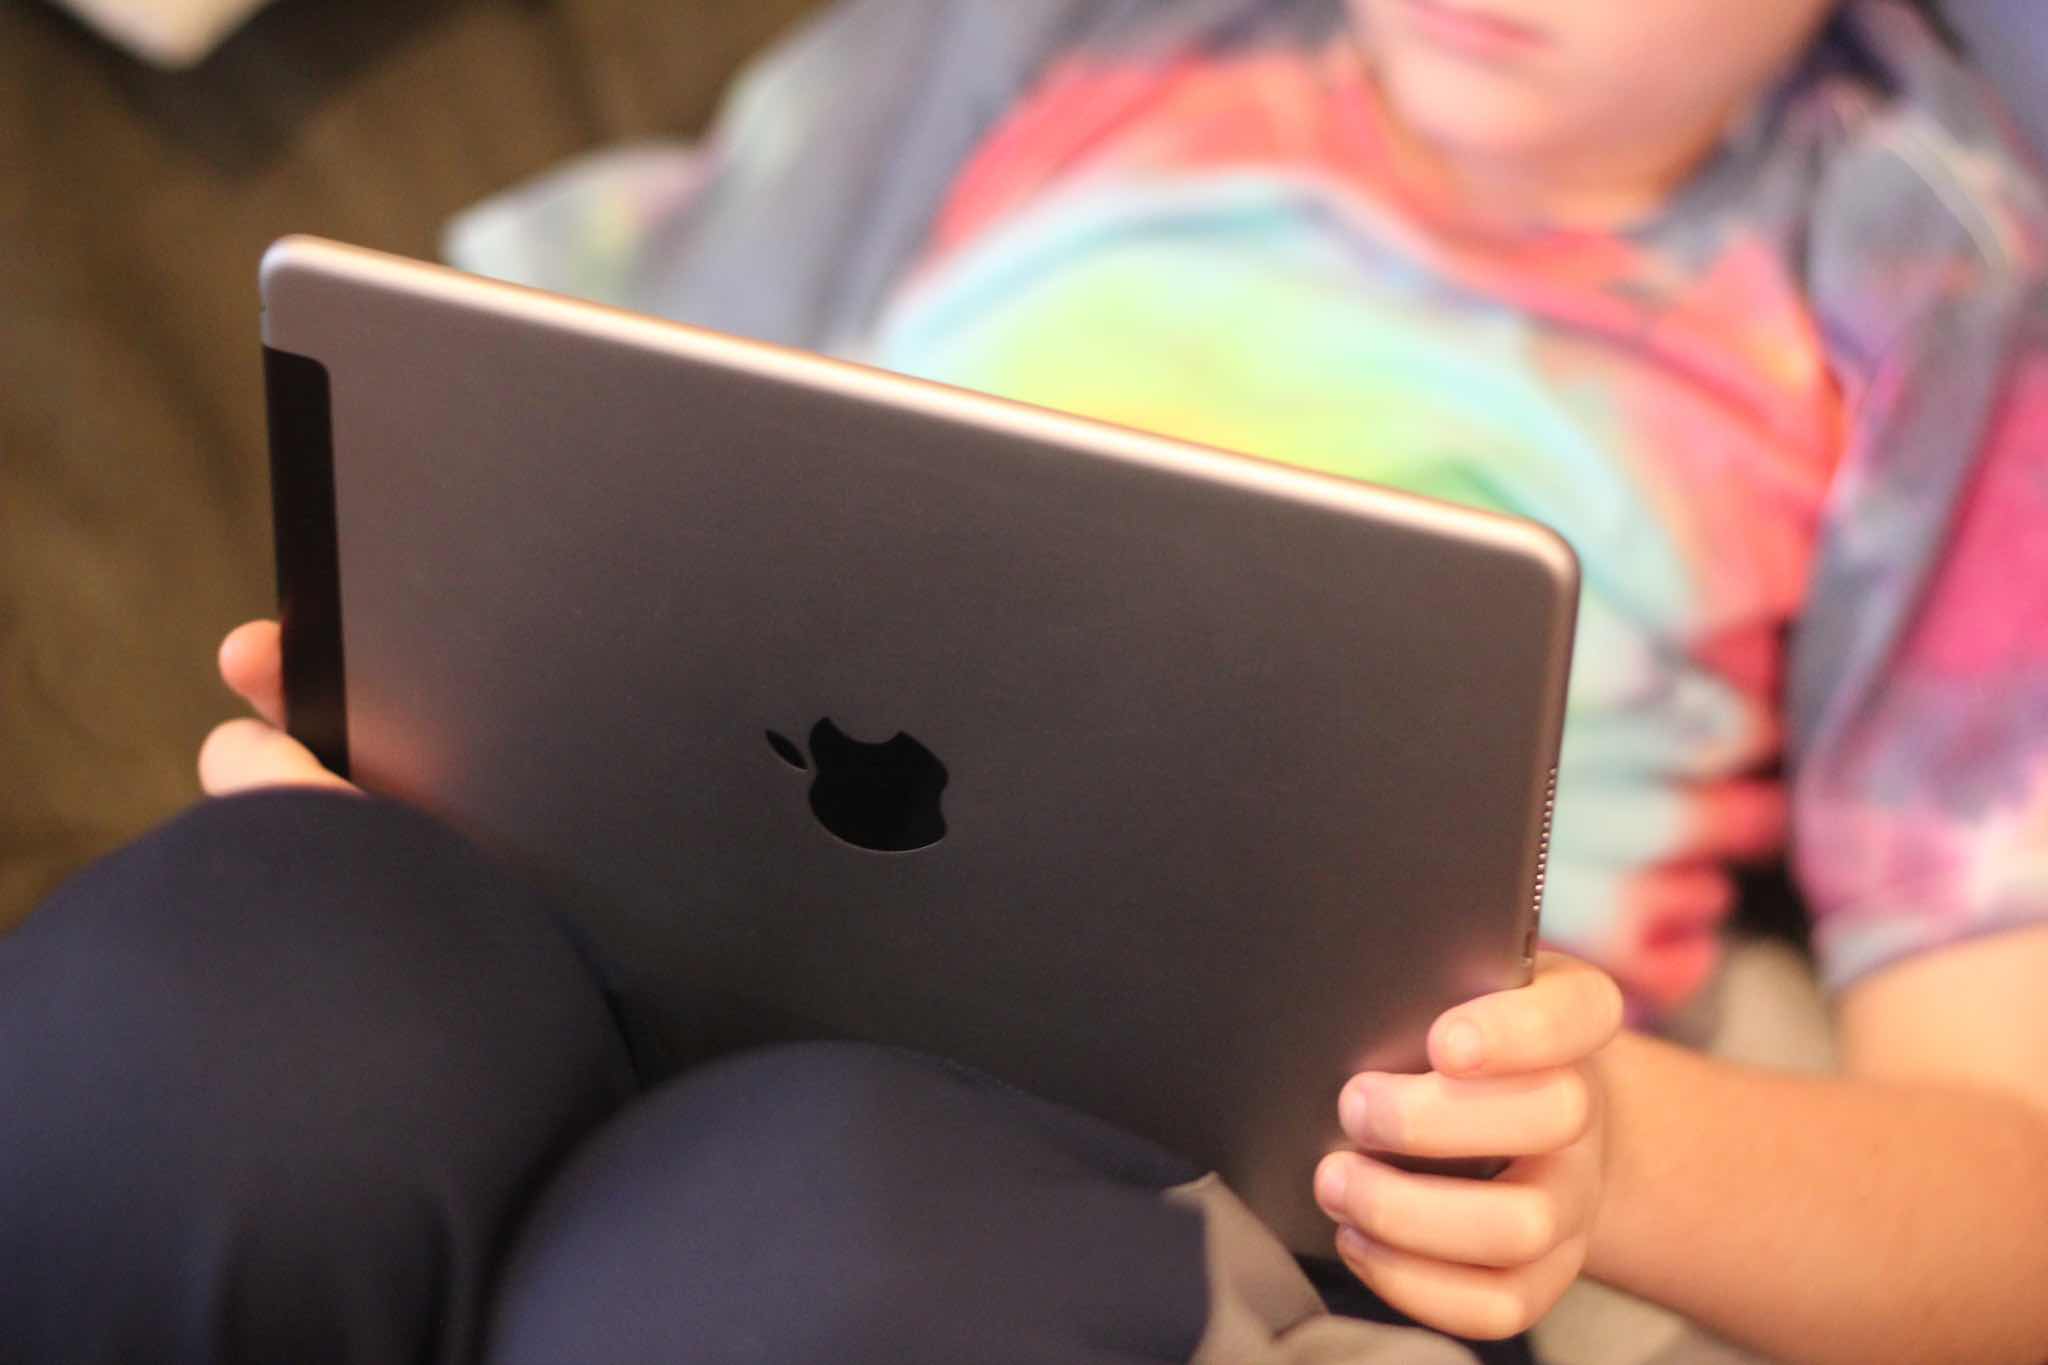 Apple iPad Air 2 Review! 